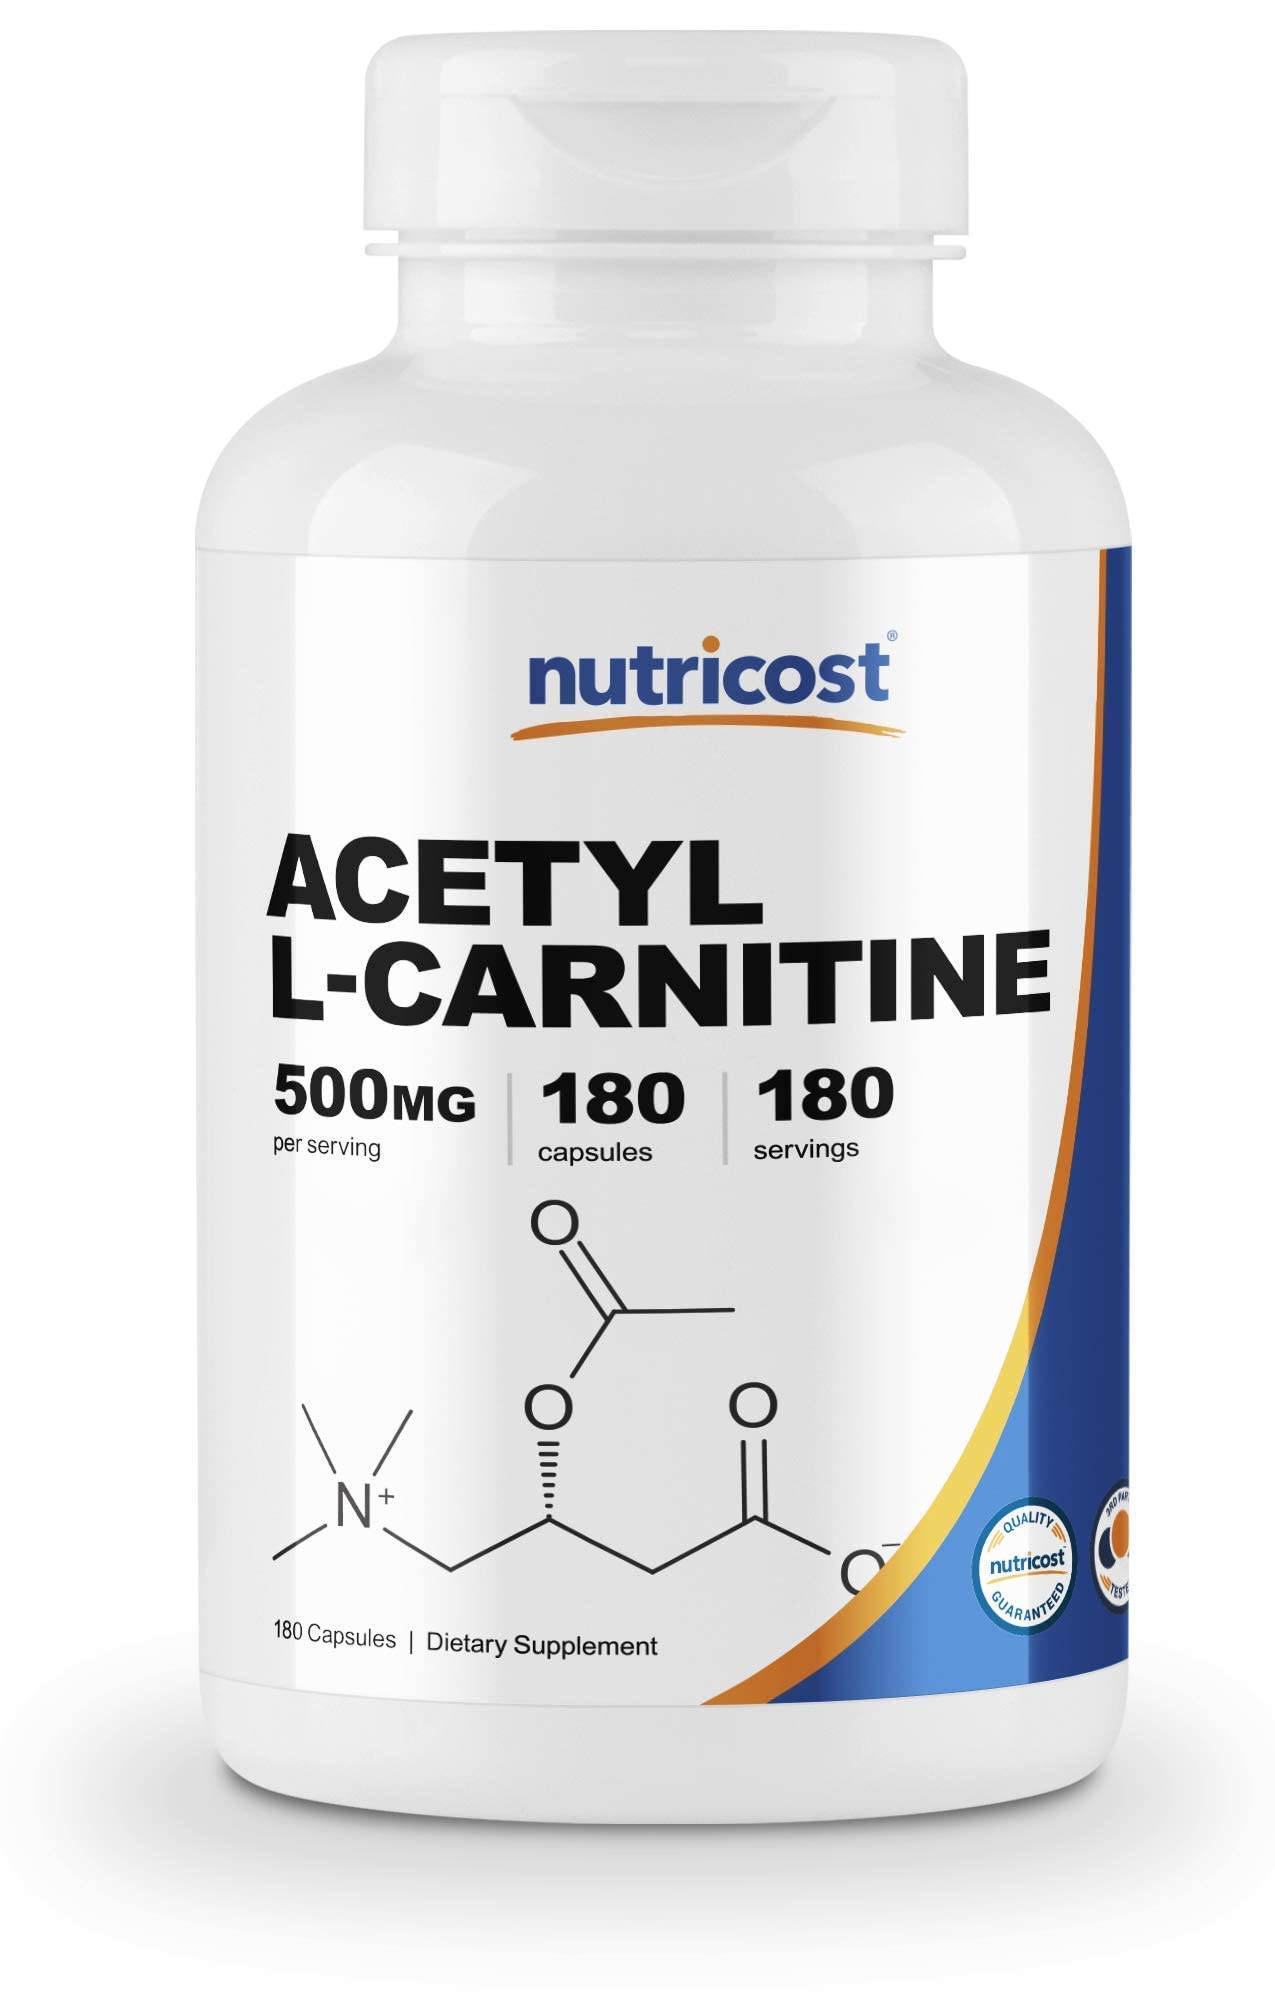 Nutricost Alpha Lipoic Acid 600mg, 240 Caps & CoQ10 100mg, 120 Caps & Acetyl L-Carnitine 500mg, 180 Caps